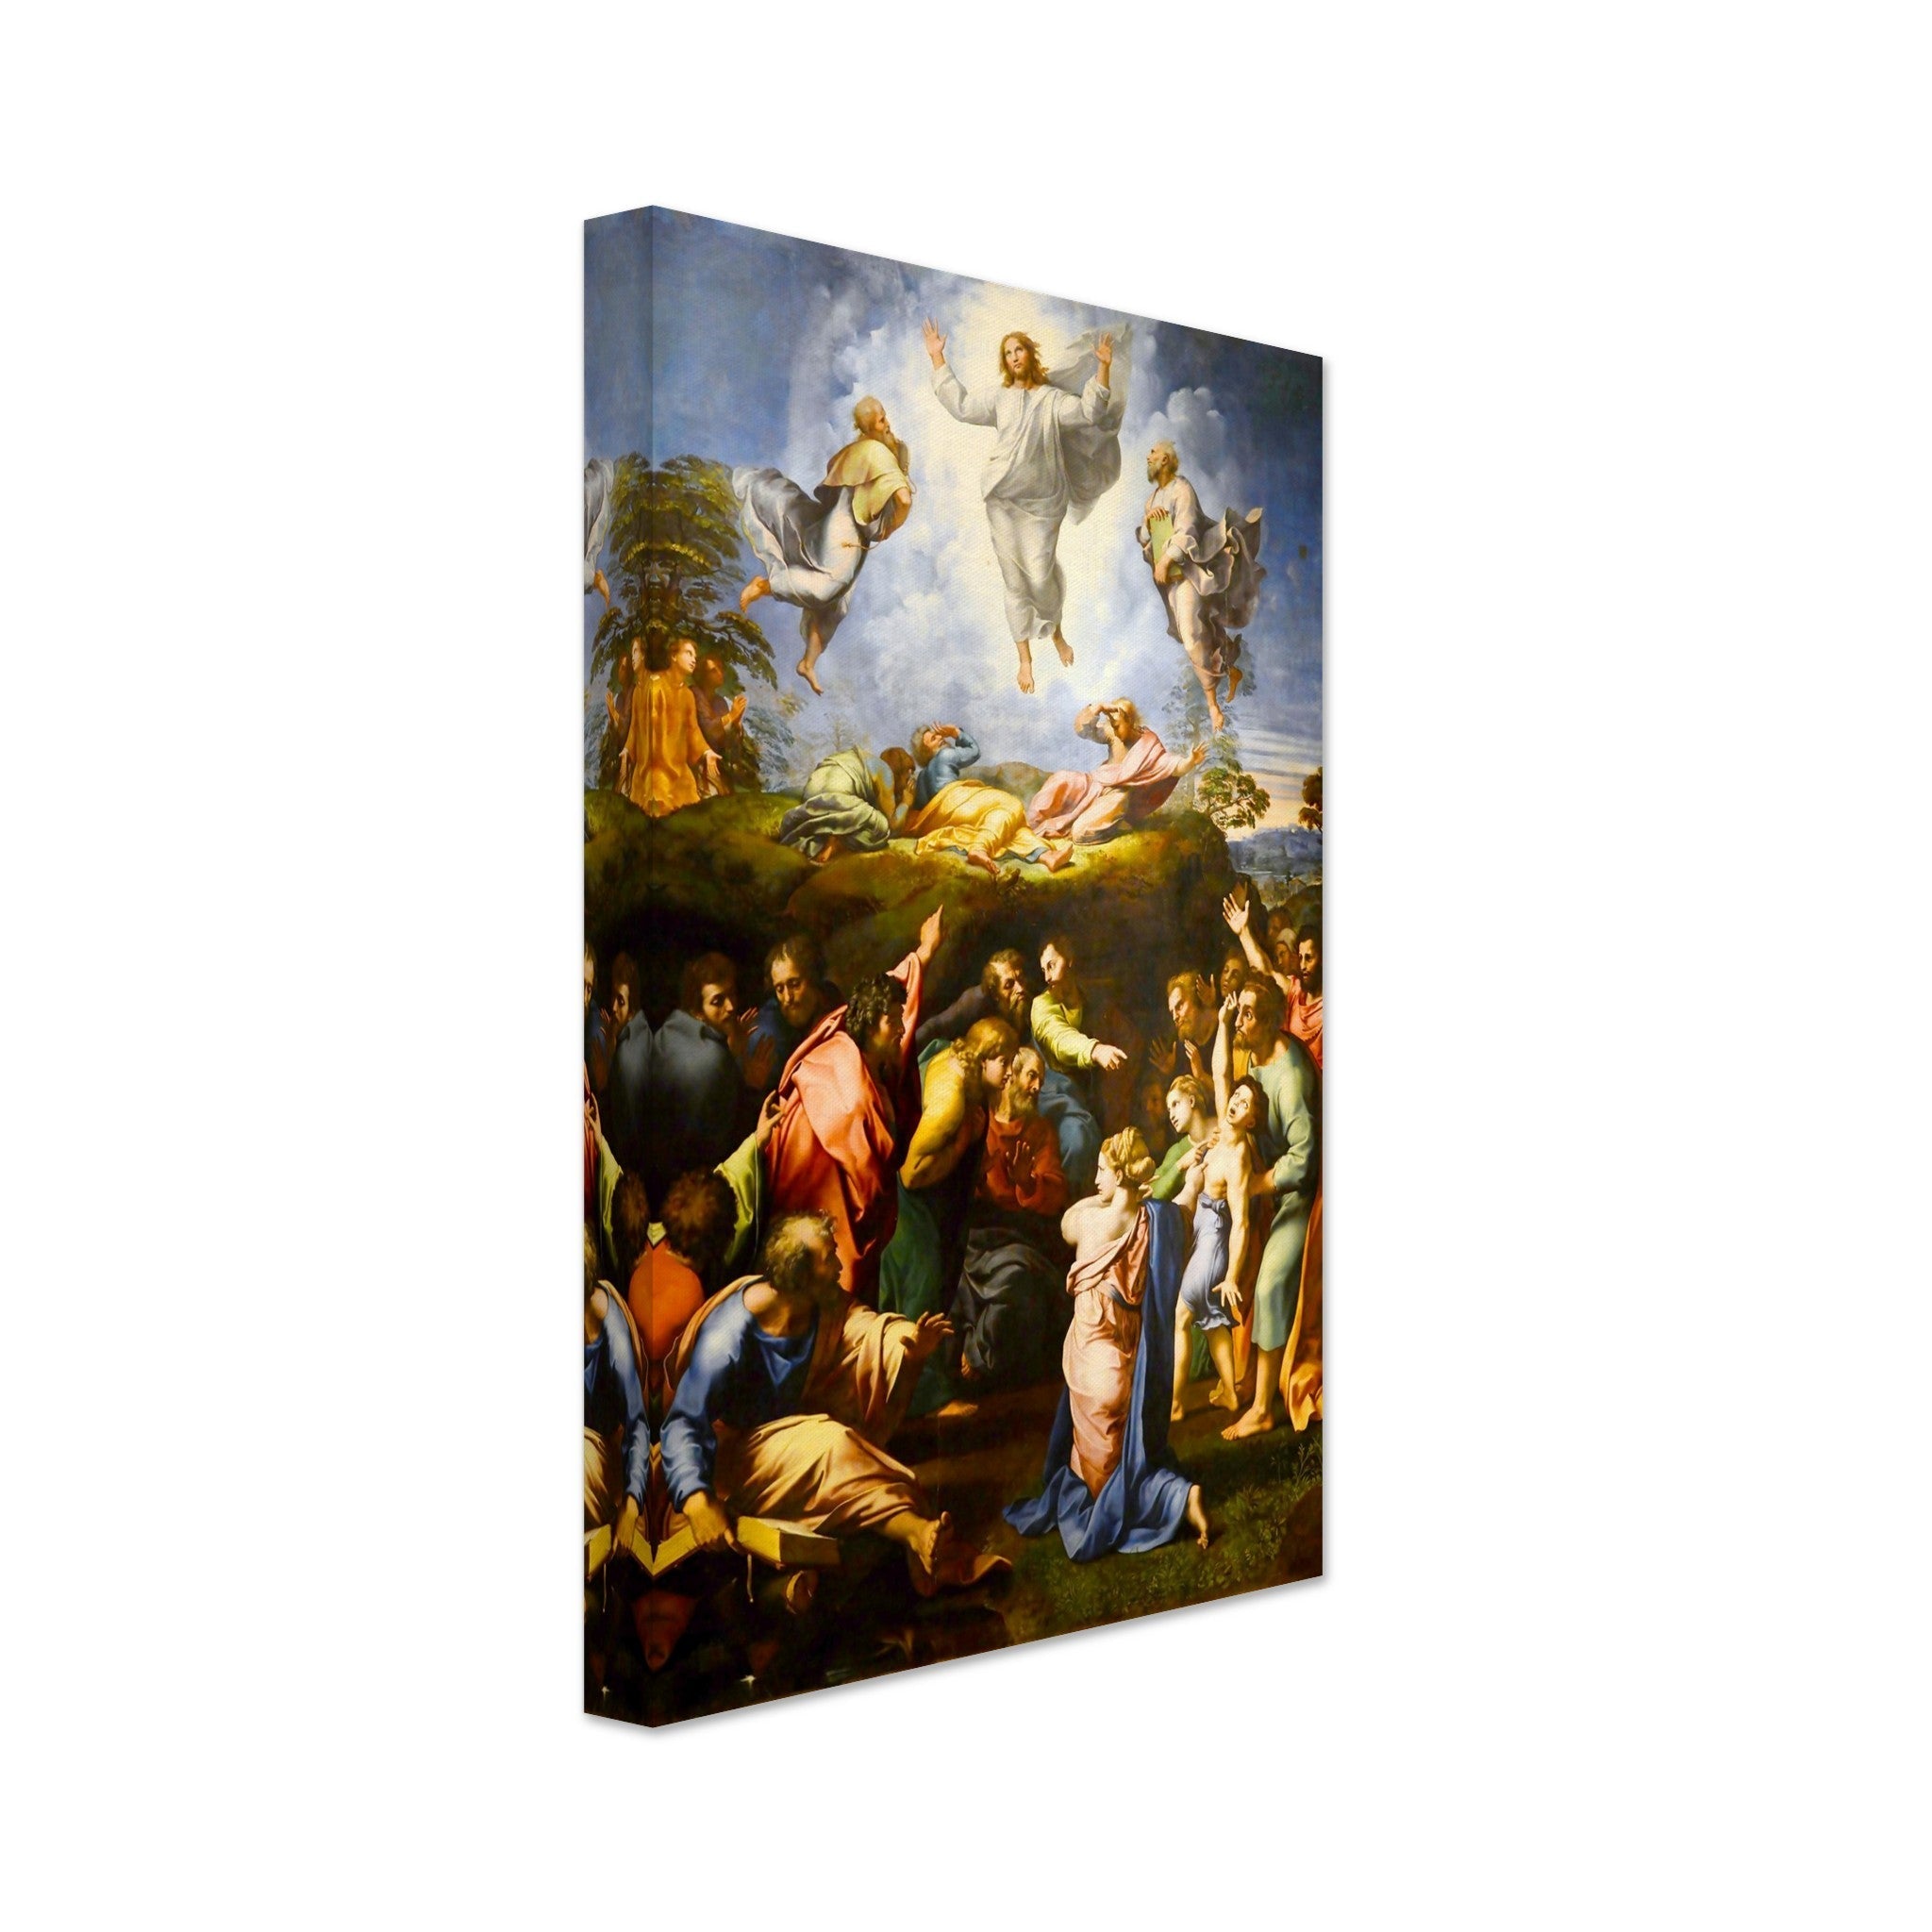 Transfiguration Canvas, By Raphael Around 1520 - Transfiguration Canvas Print Renaissance Raphael - WallArtPrints4U